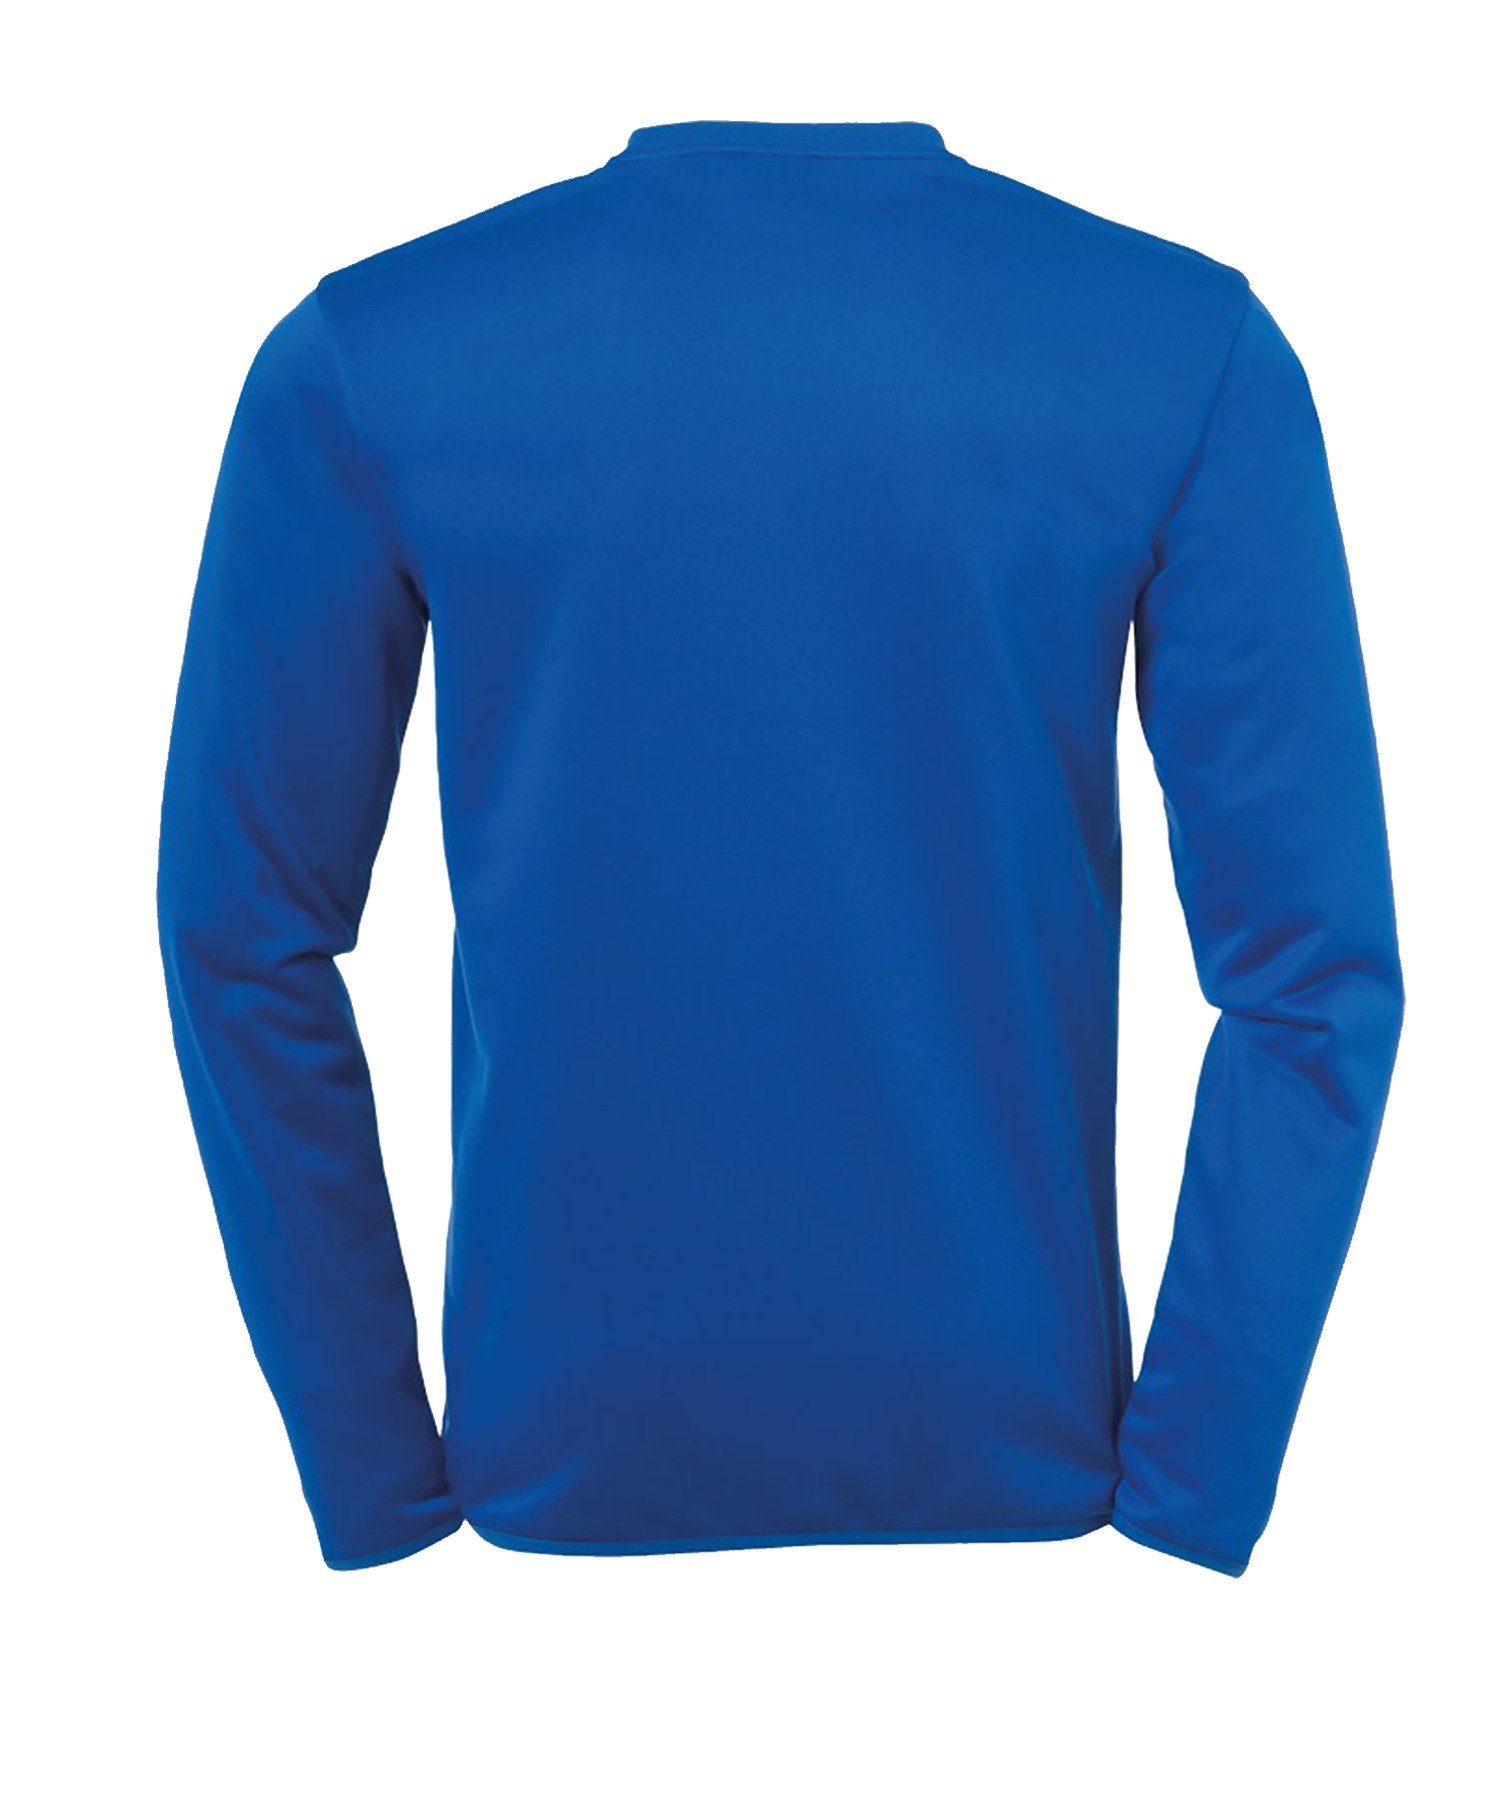 Trainingstop uhlsport blauWeiss Essential langarm Sweatshirt